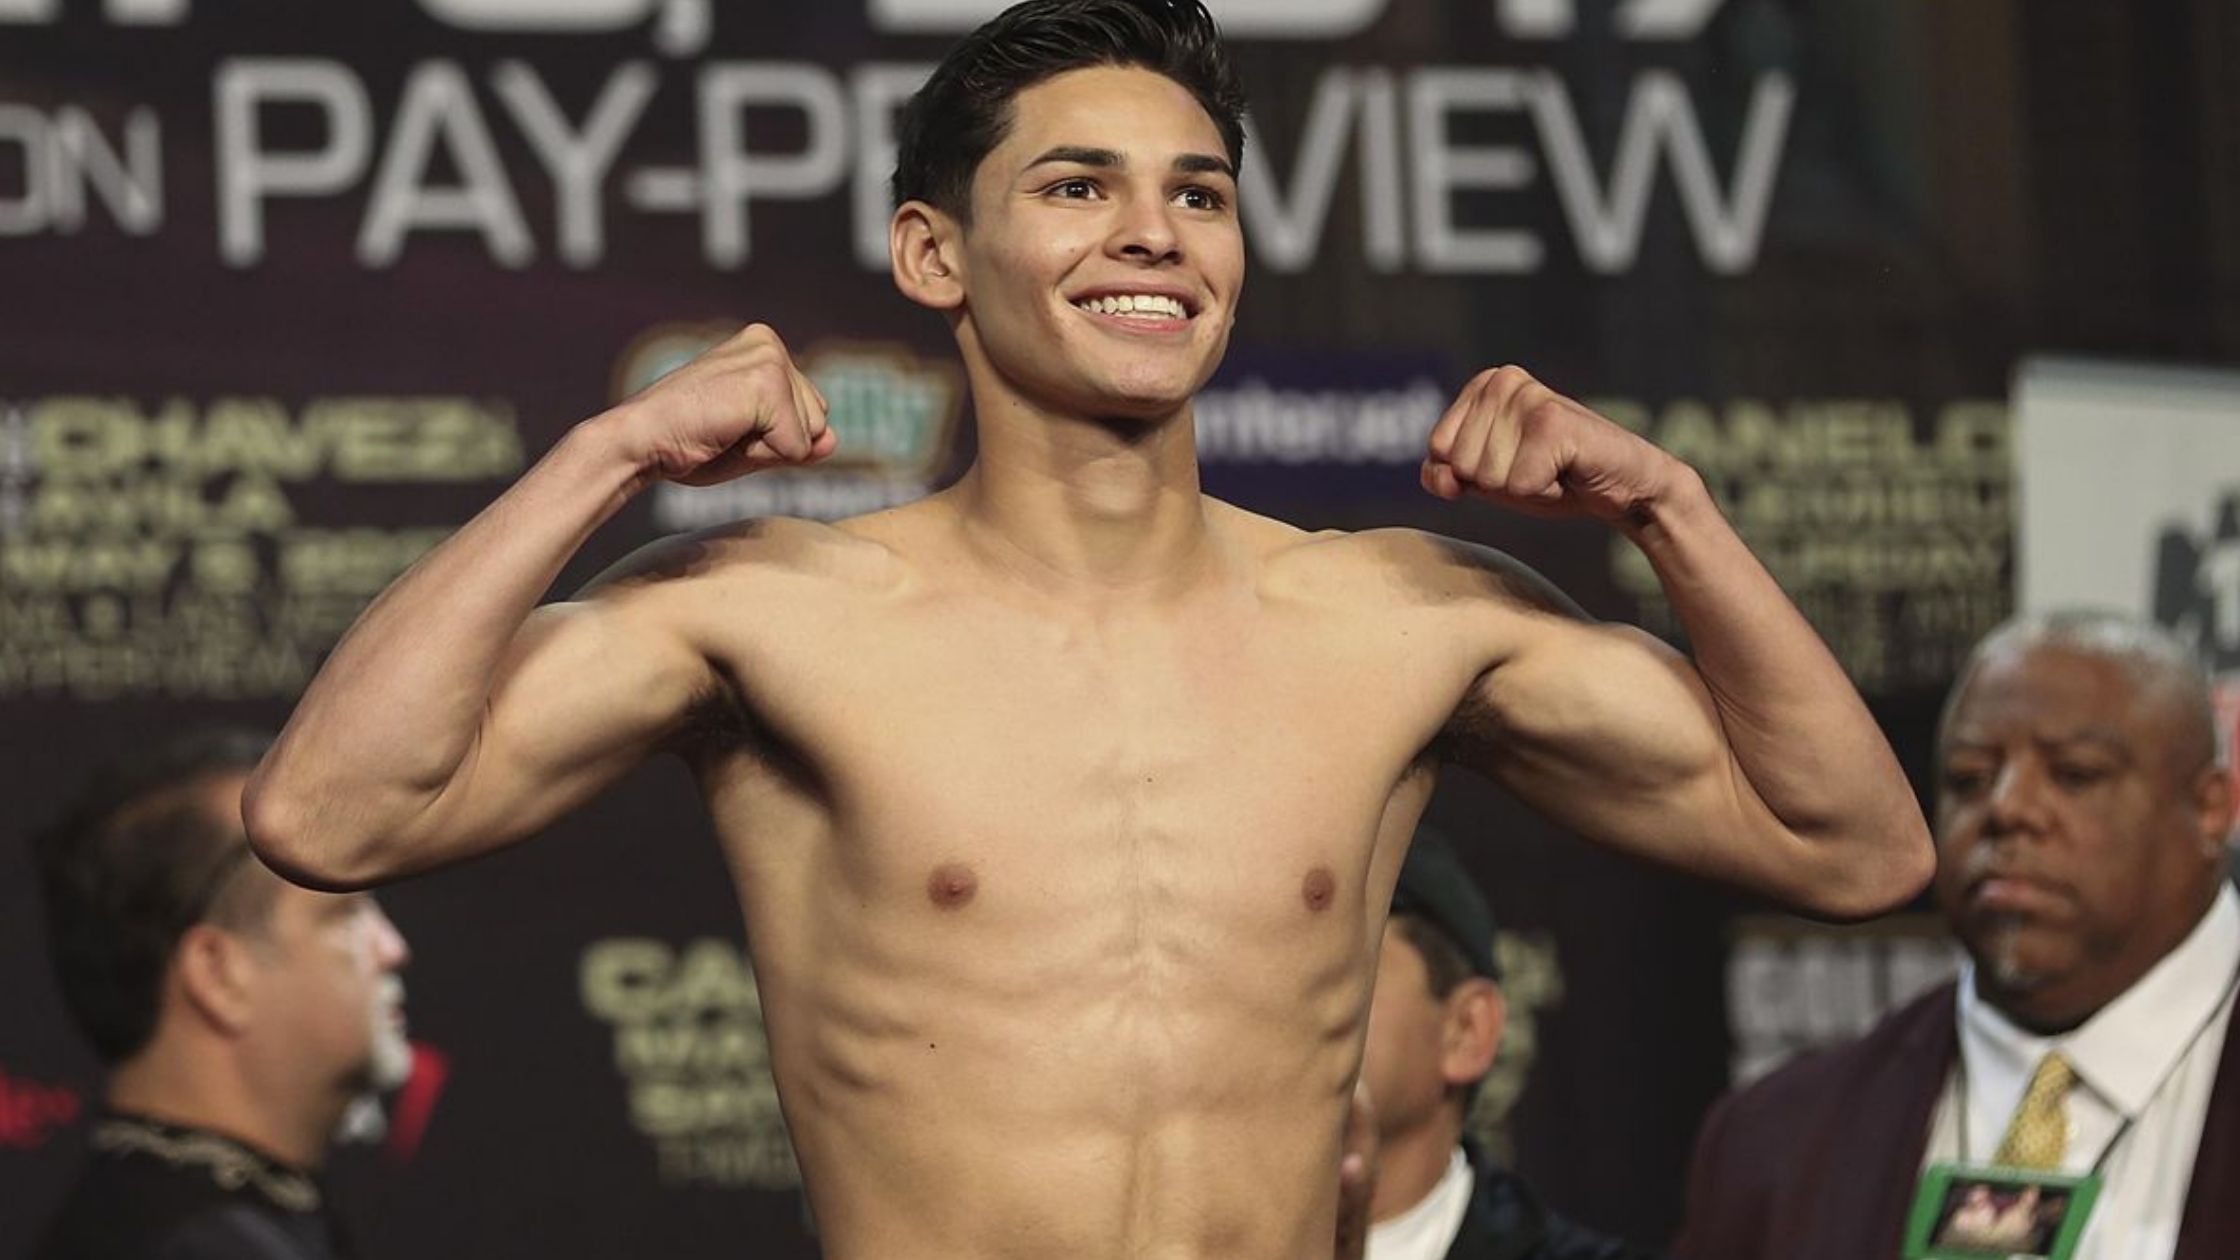 Ryan Garcia future great boxer or social media starlet